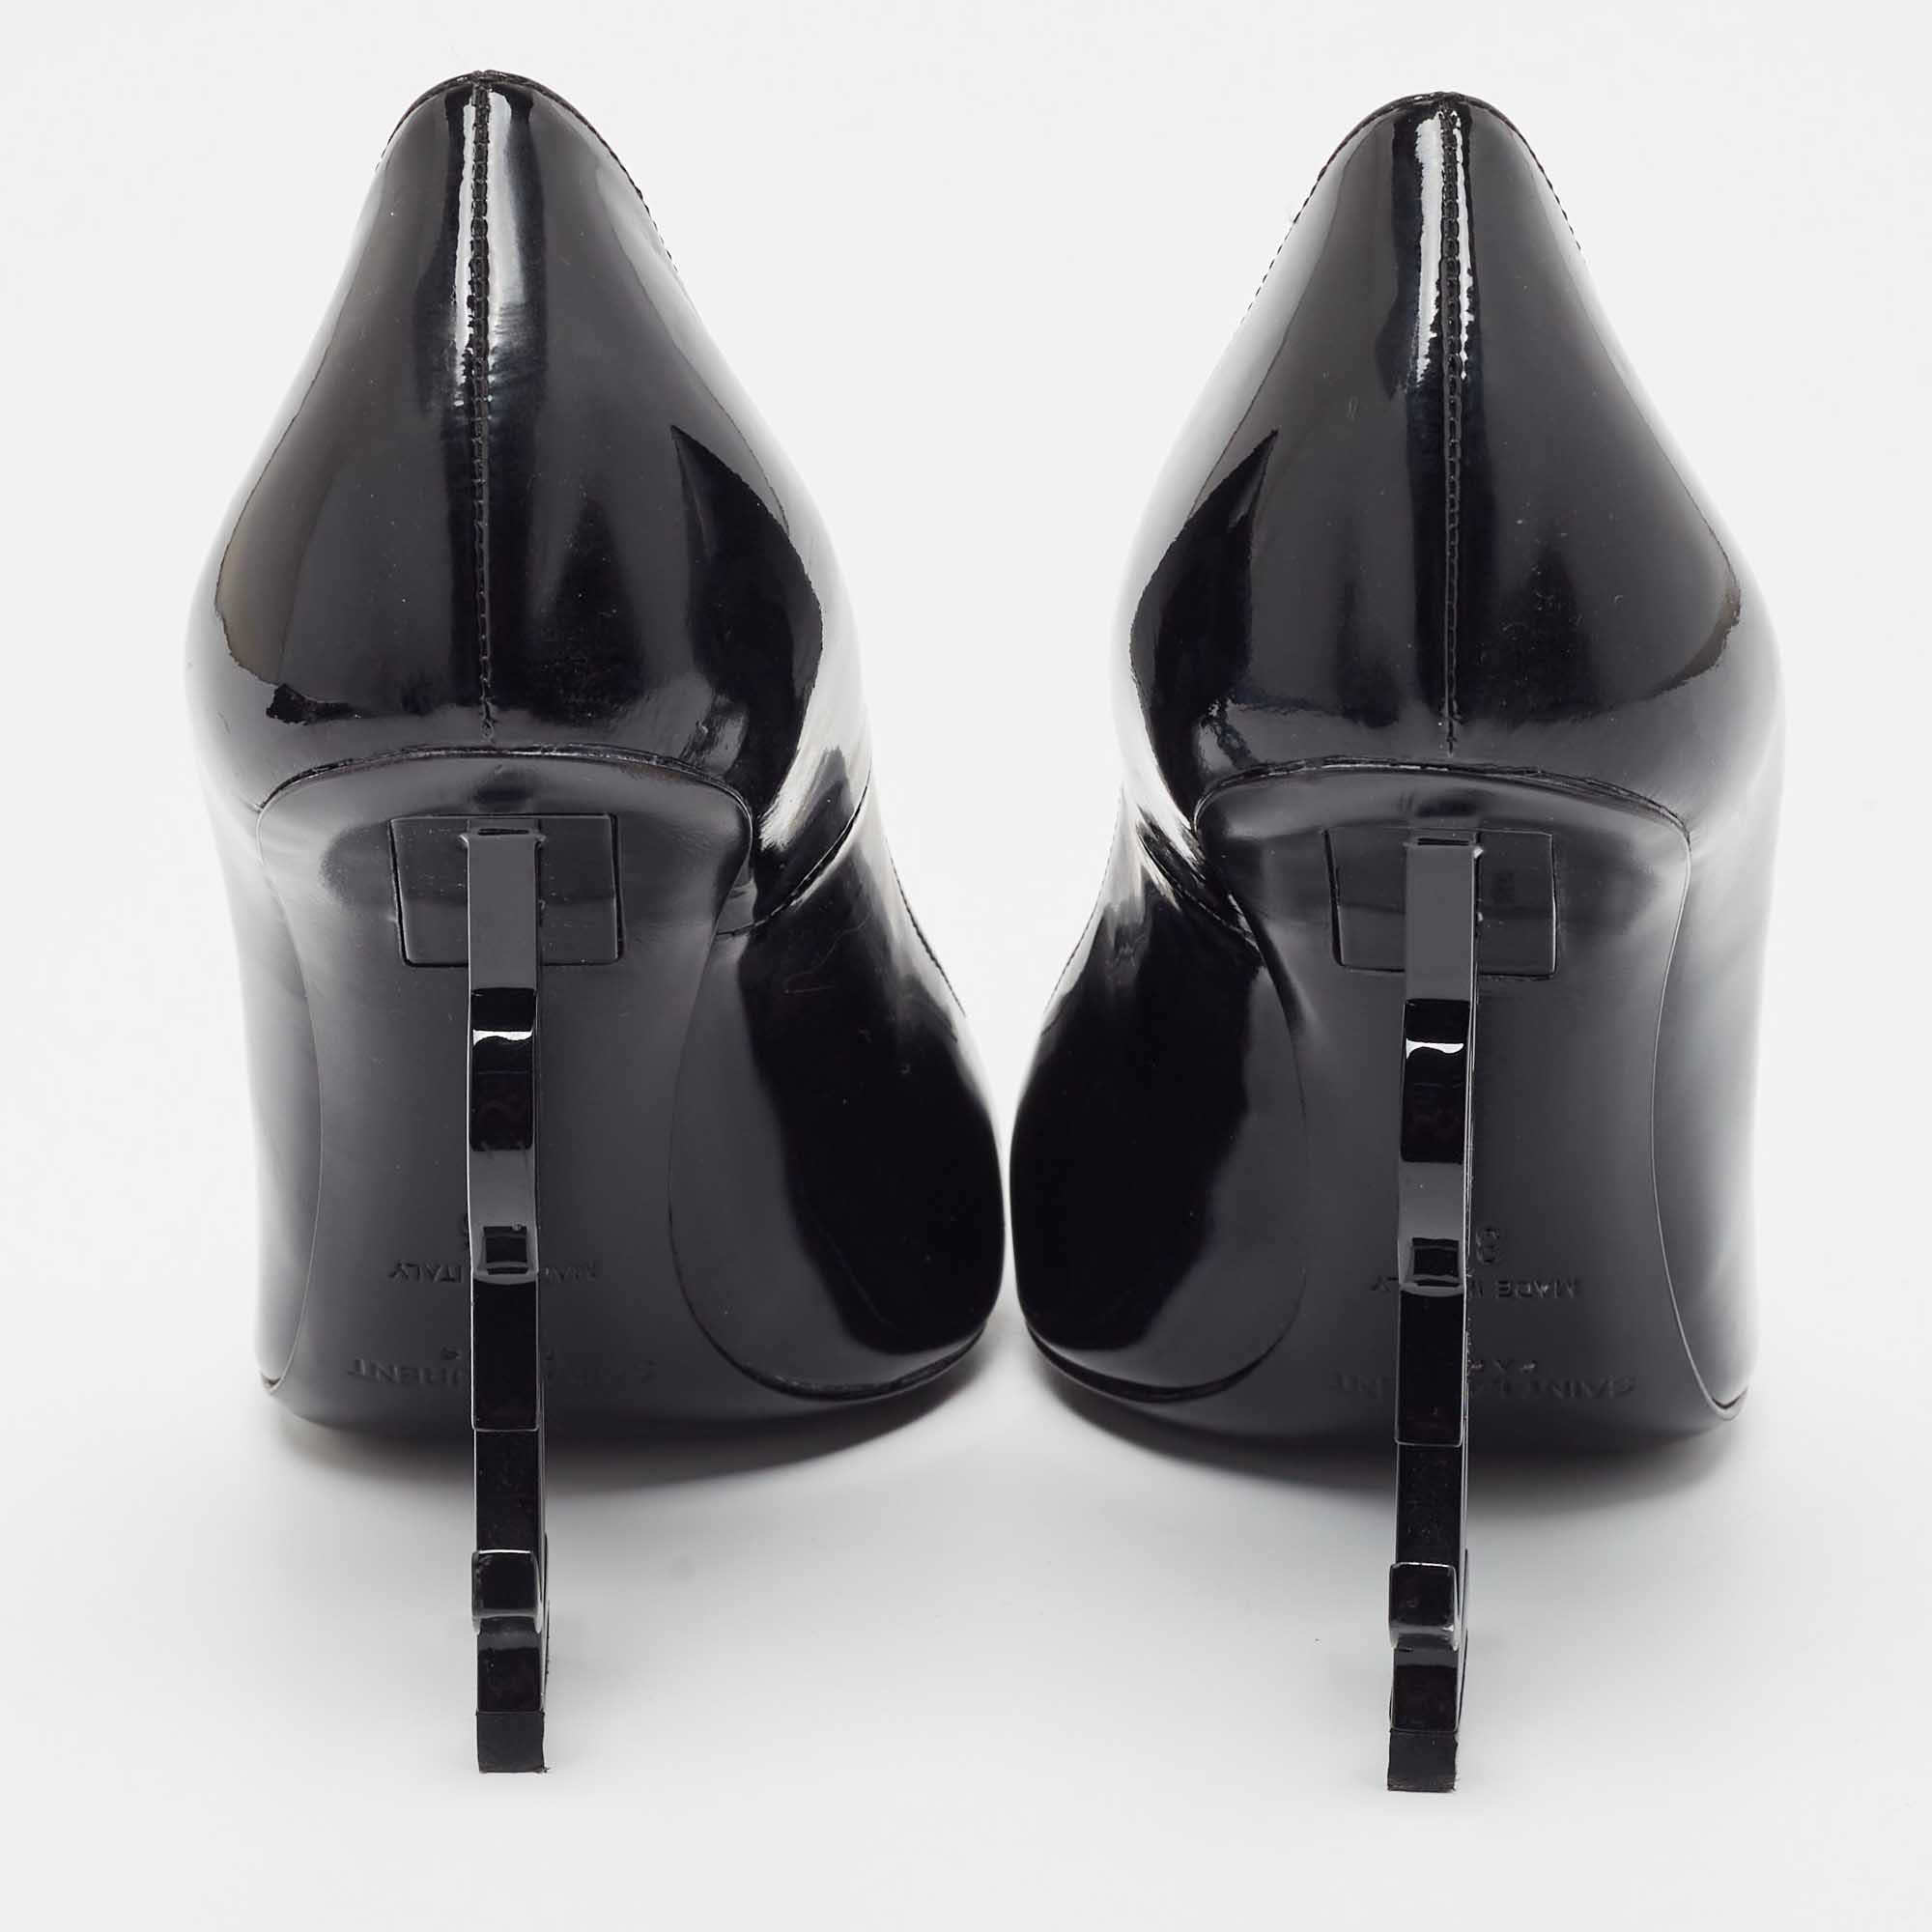 Saint Laurent Black Patent Leather Opyum Pointed Toe Pumps Size 35